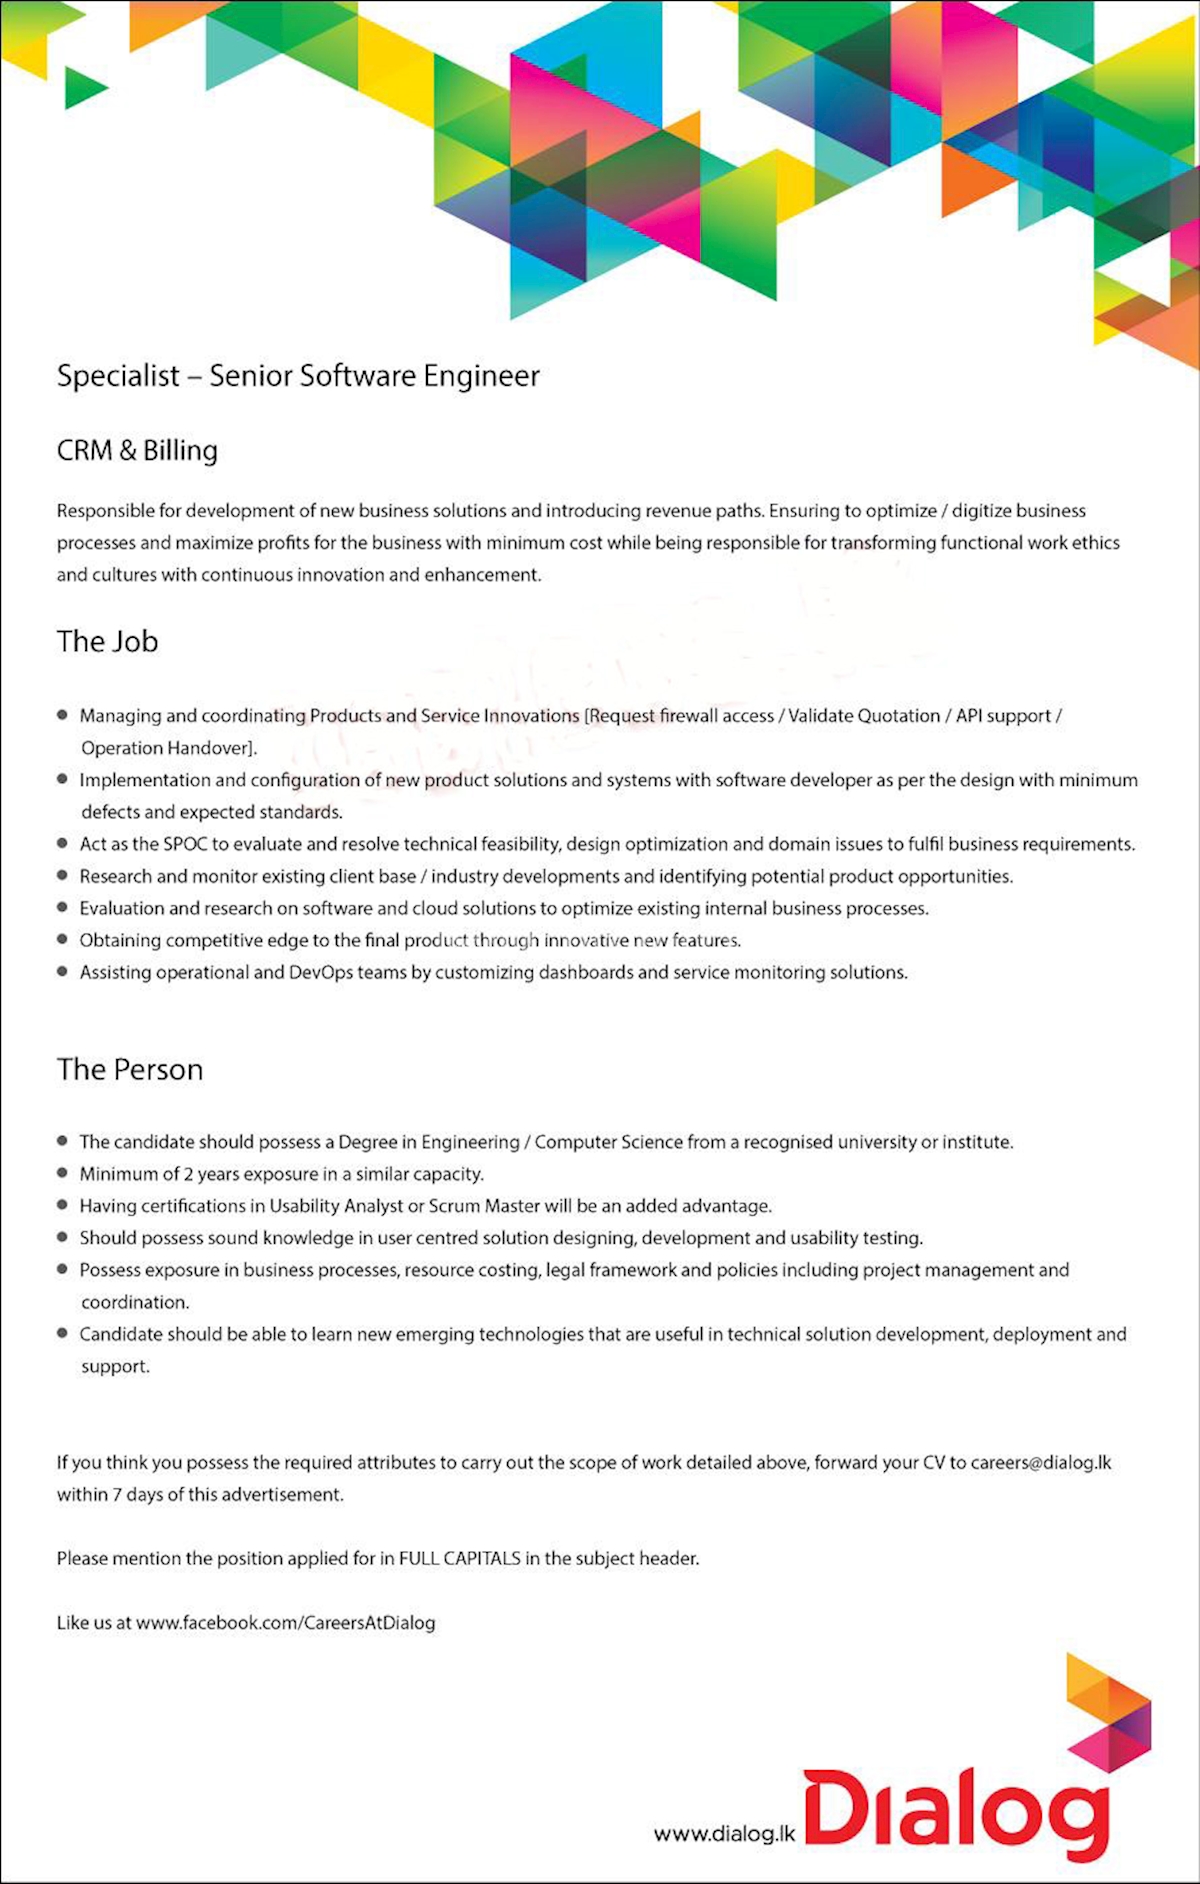 Specialist - Senior Software Engineer